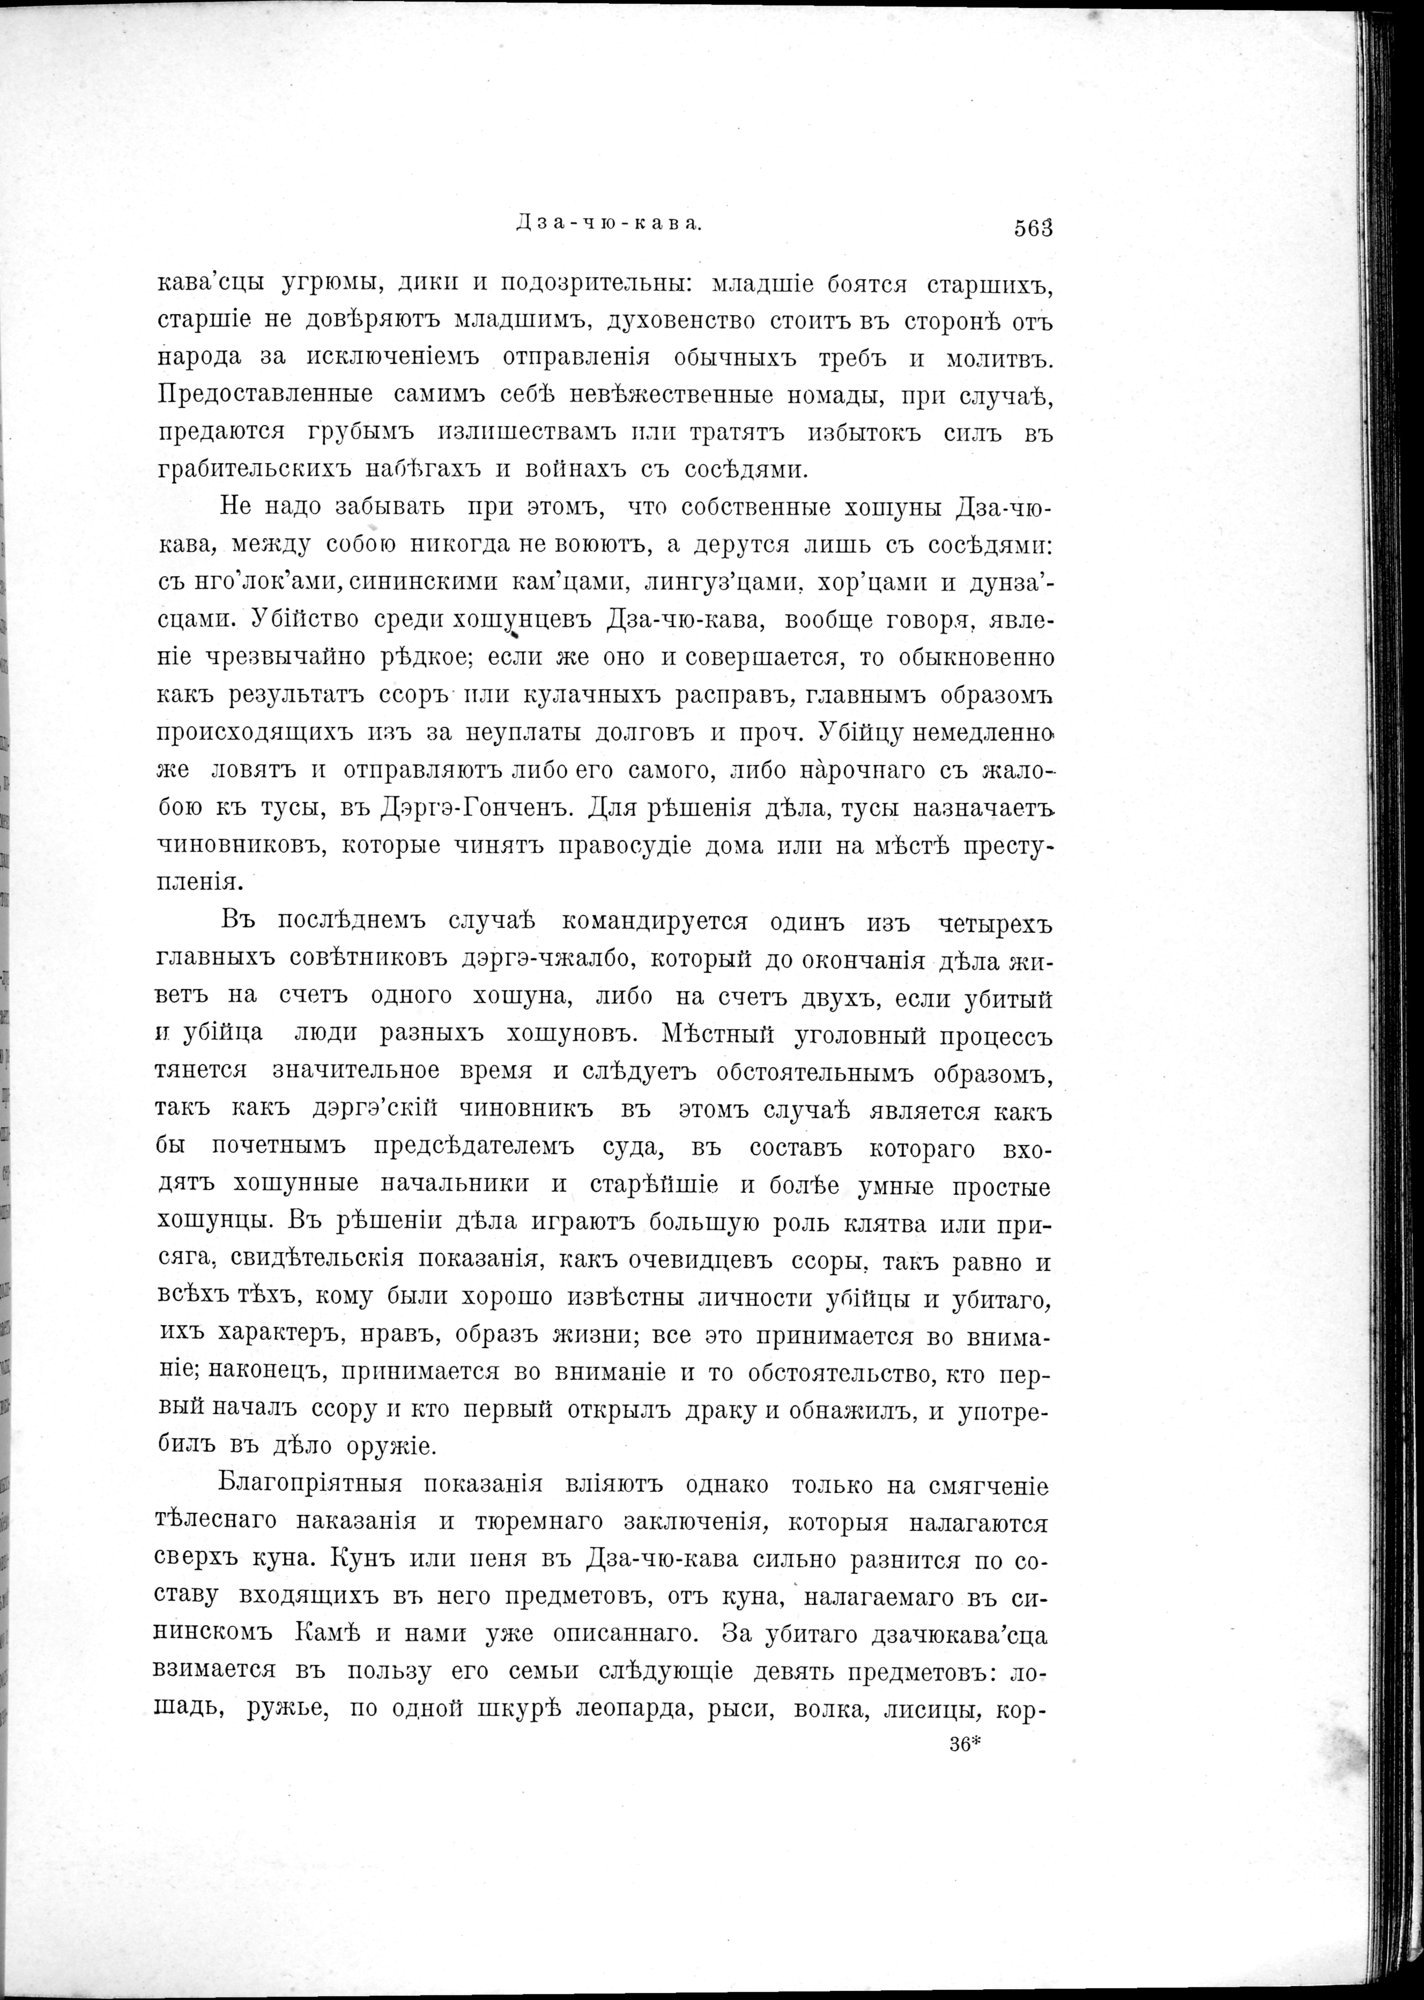 Mongoliia i Kam : vol.2 / Page 387 (Grayscale High Resolution Image)